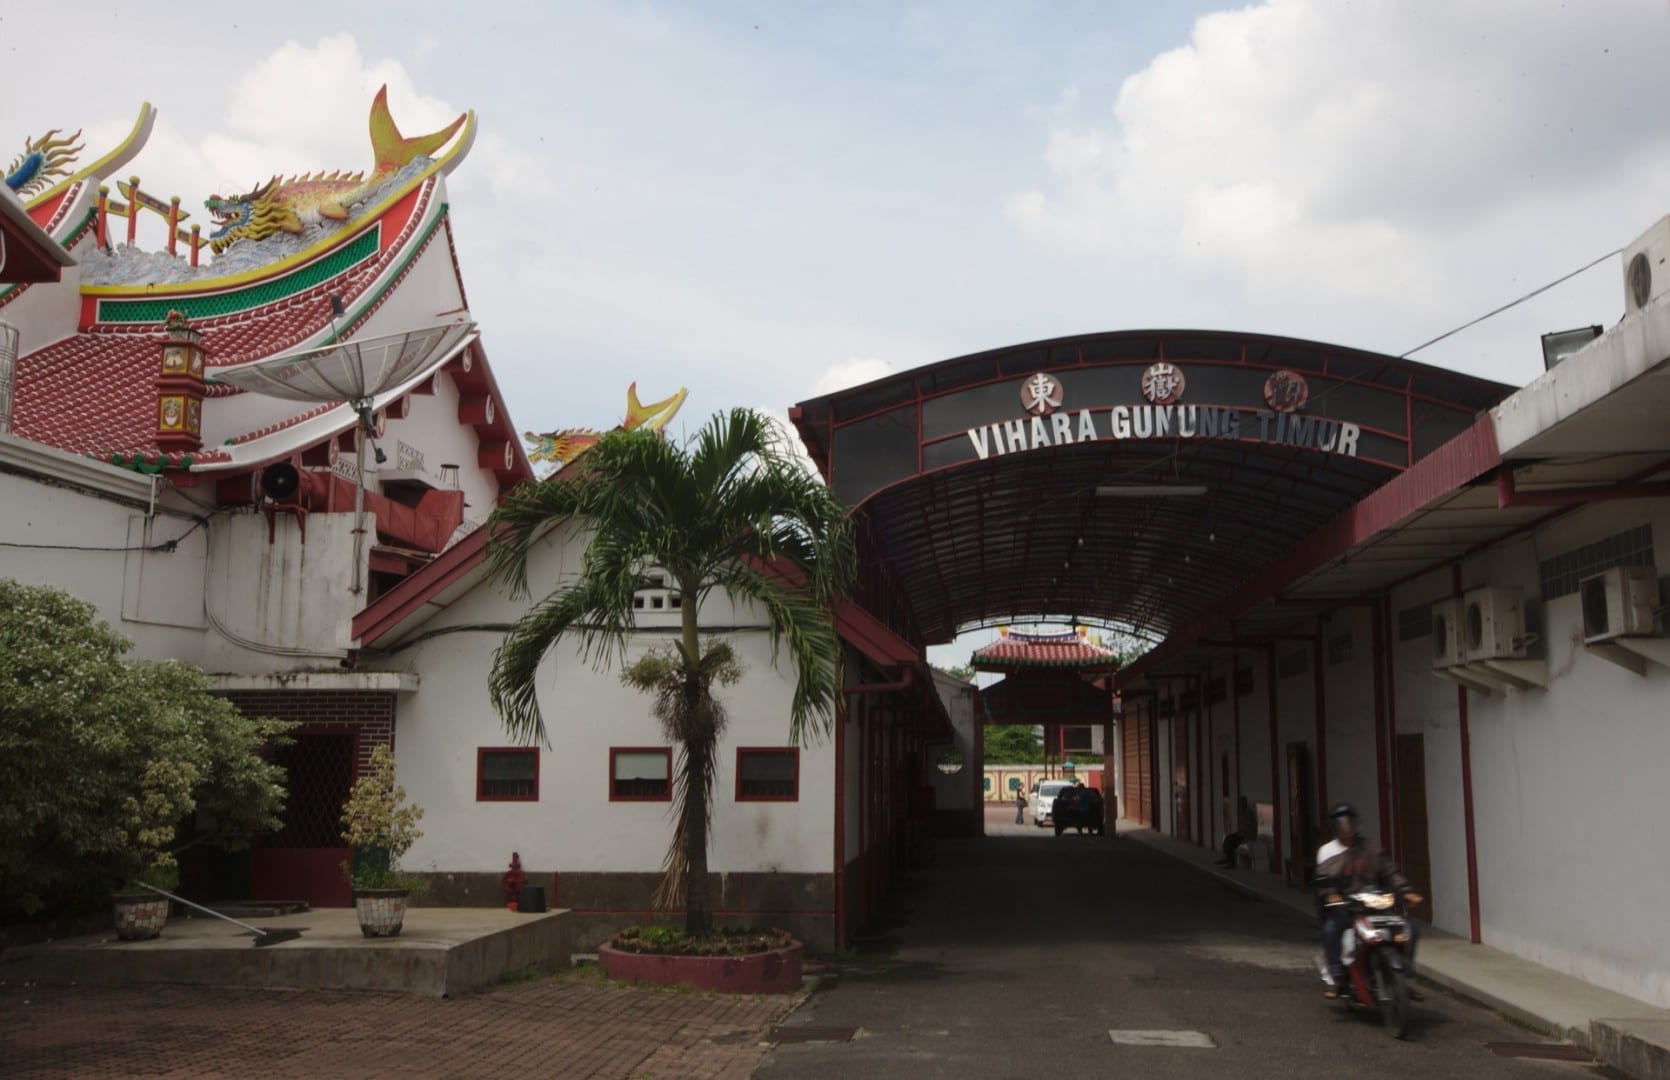 Entrada al templo daoísta chino de Vihara Gunung Timur. Medan Indonesia